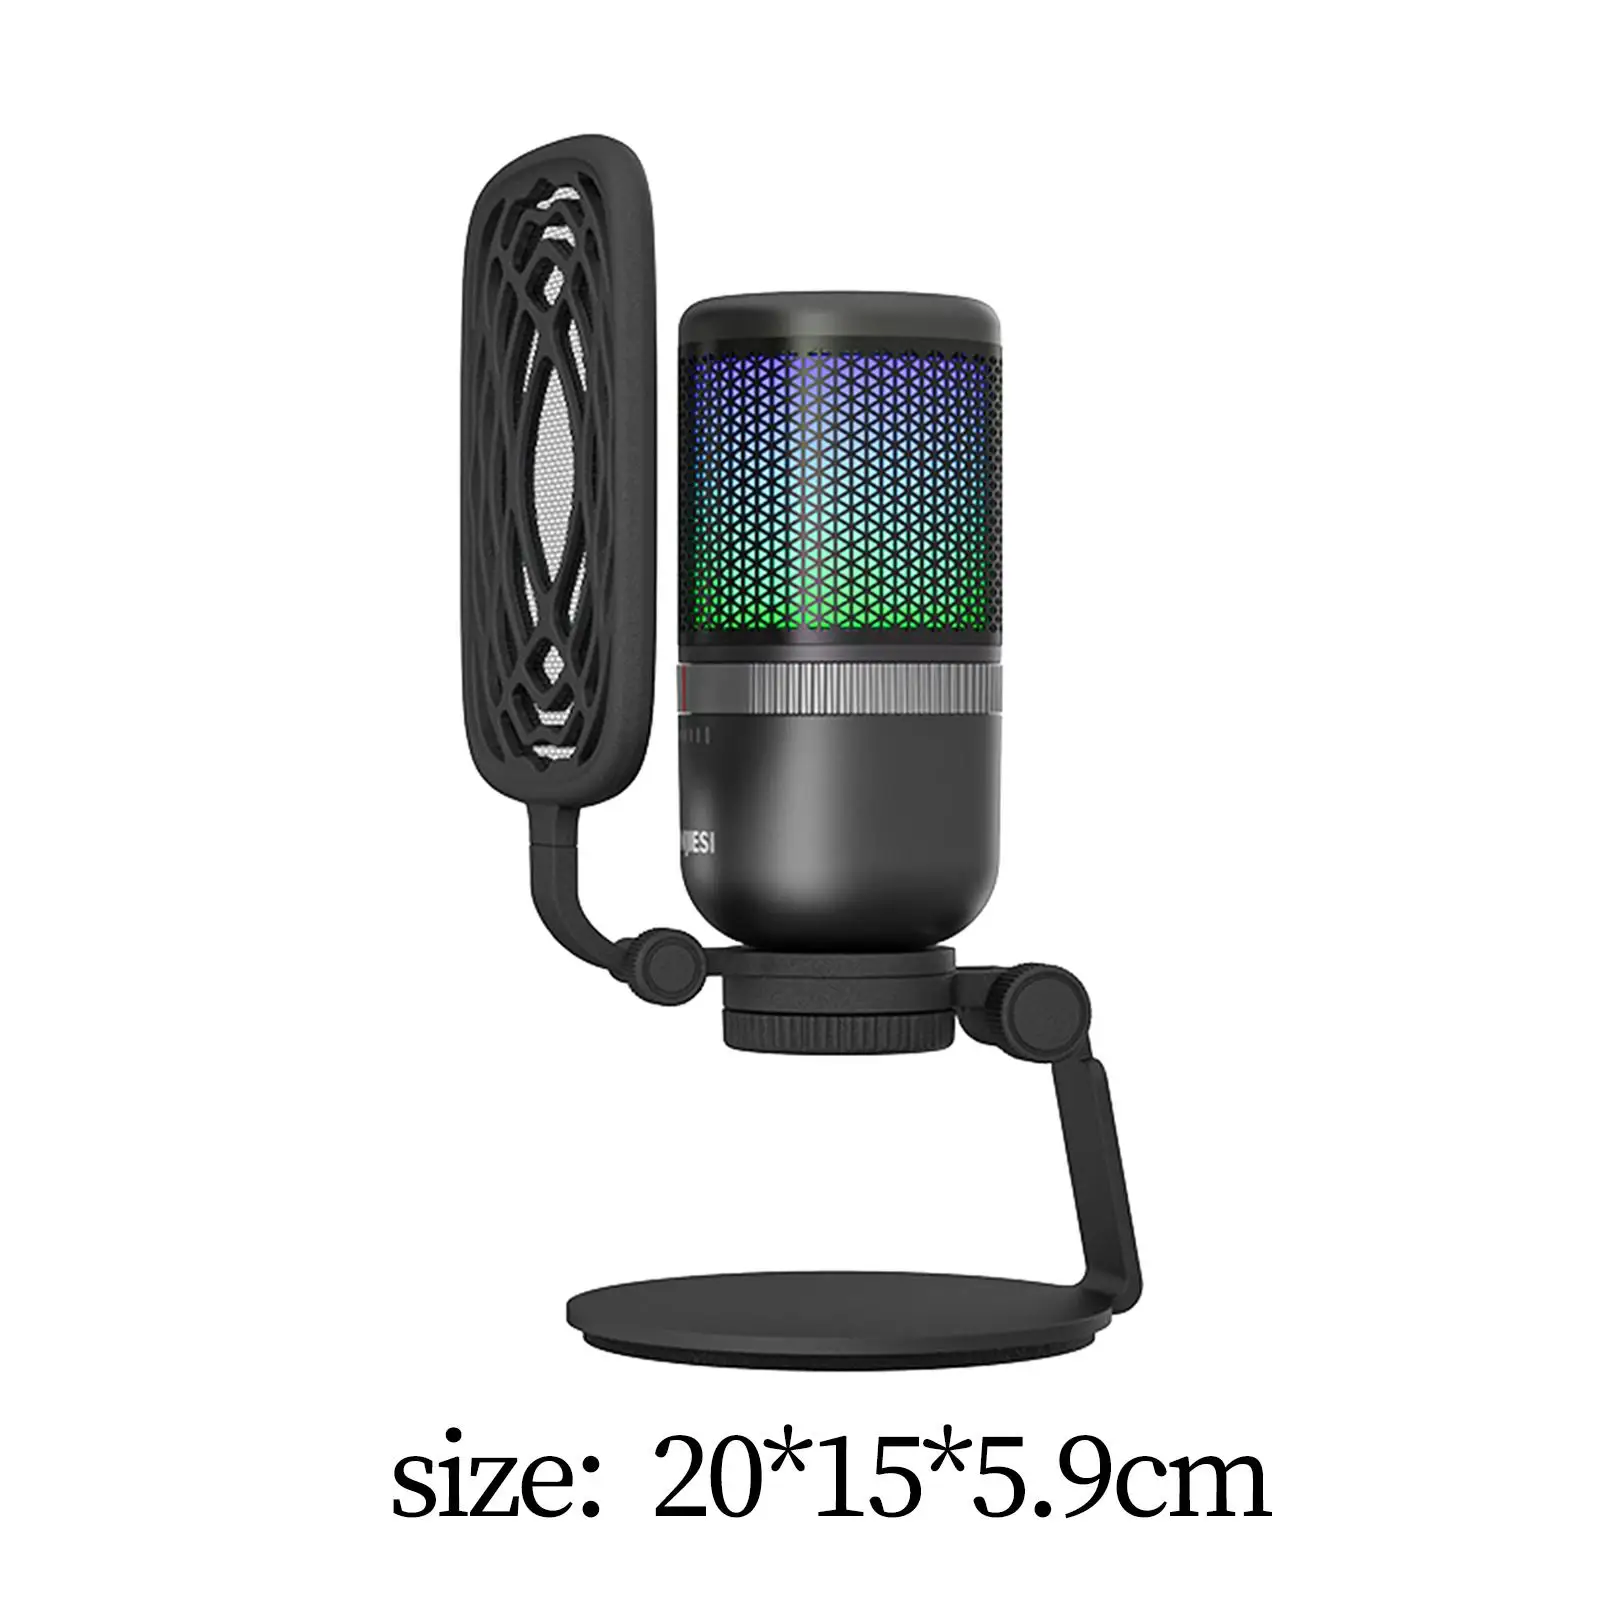 USB Microphone 90 degree Adjustable Tilt Angle Sound Control Colorful RGB Light Plug and Play Studio and Computer Condenser Mic